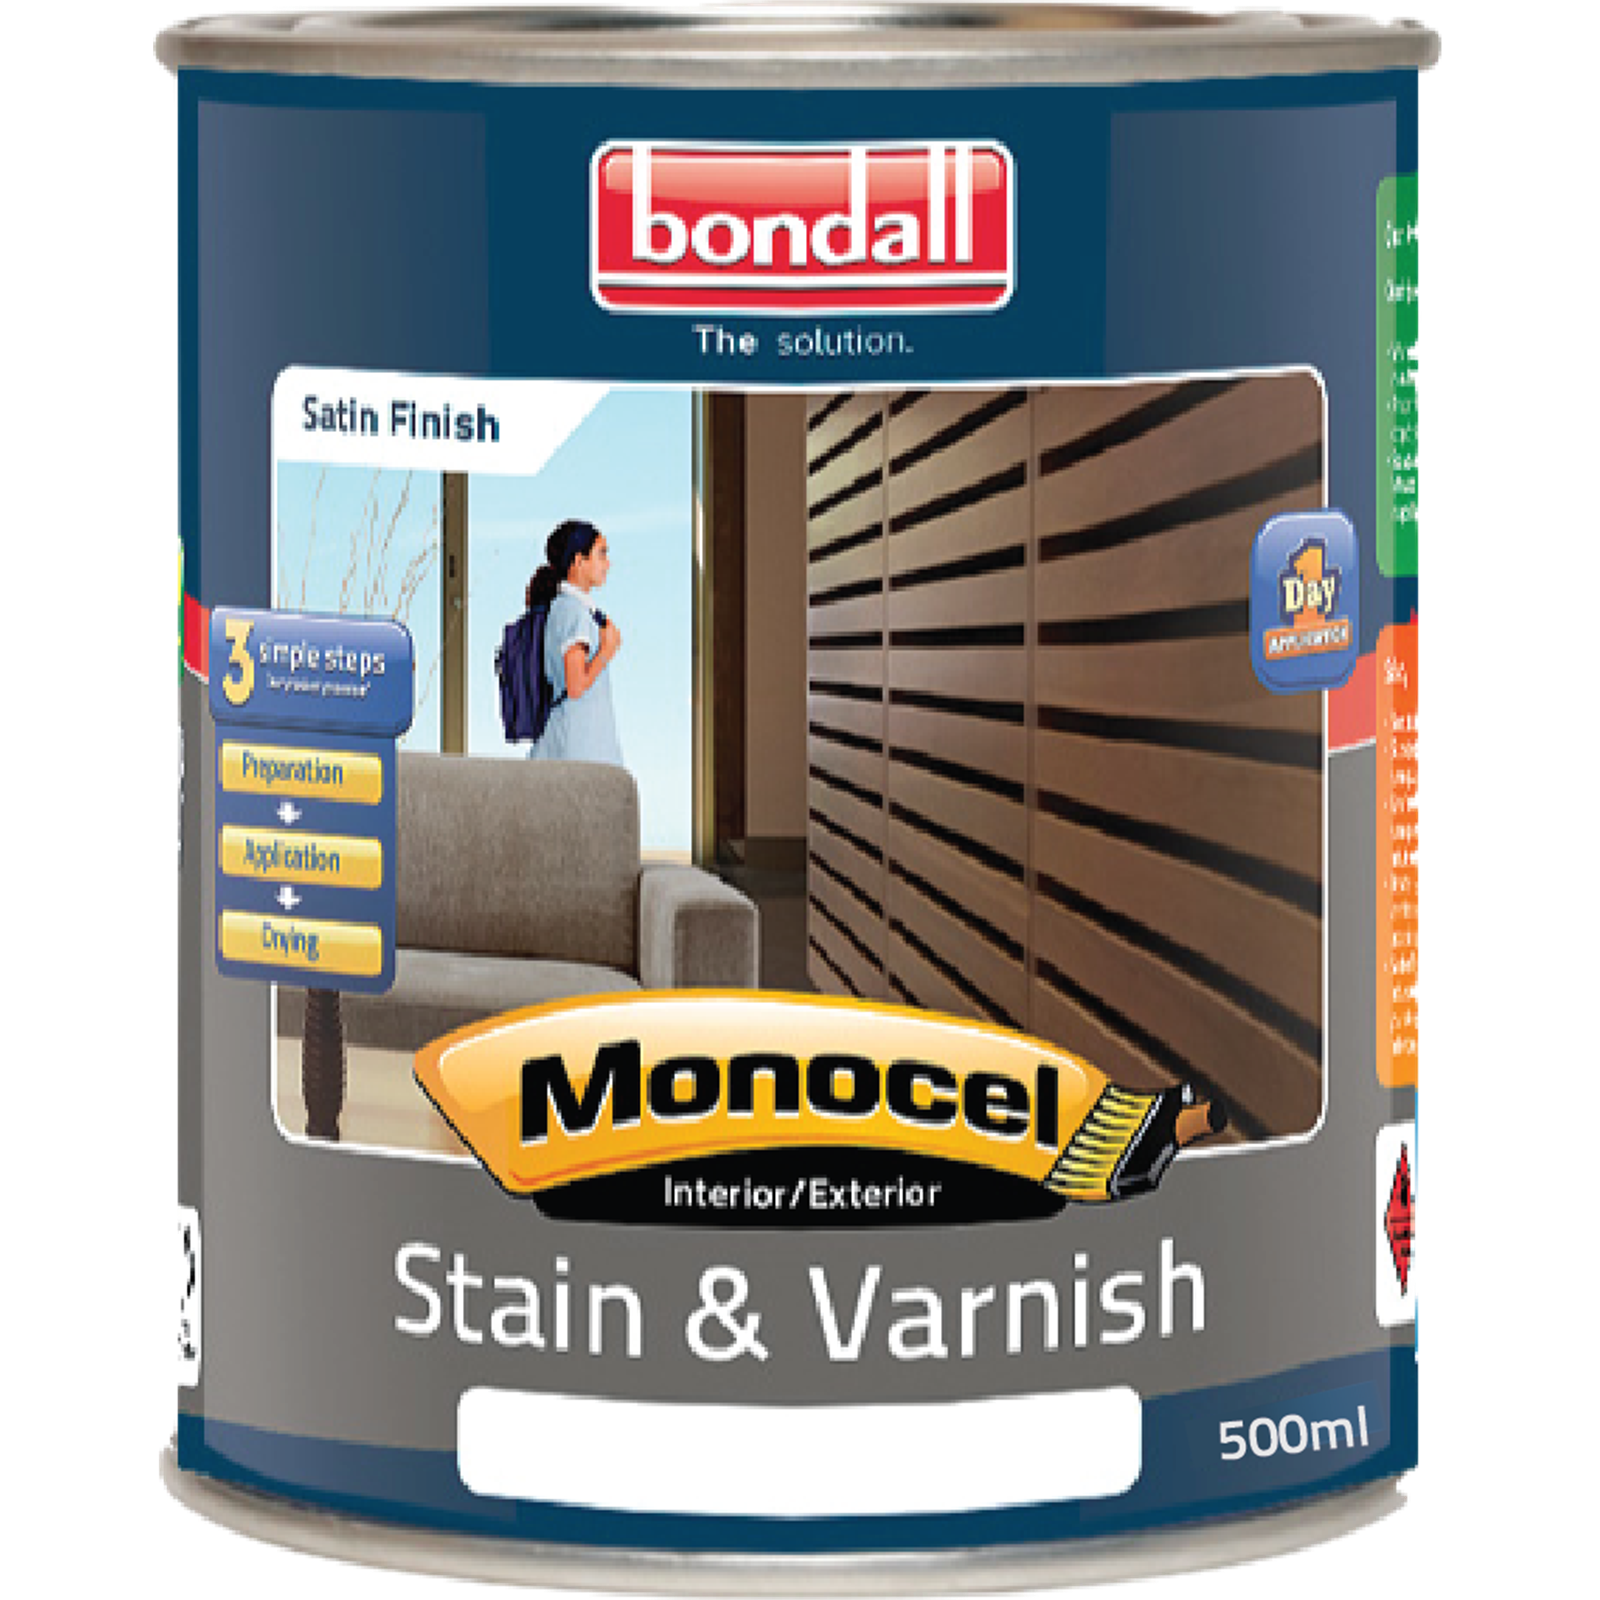 Bondall 500ml Monocel Walnut Stain & Varnish